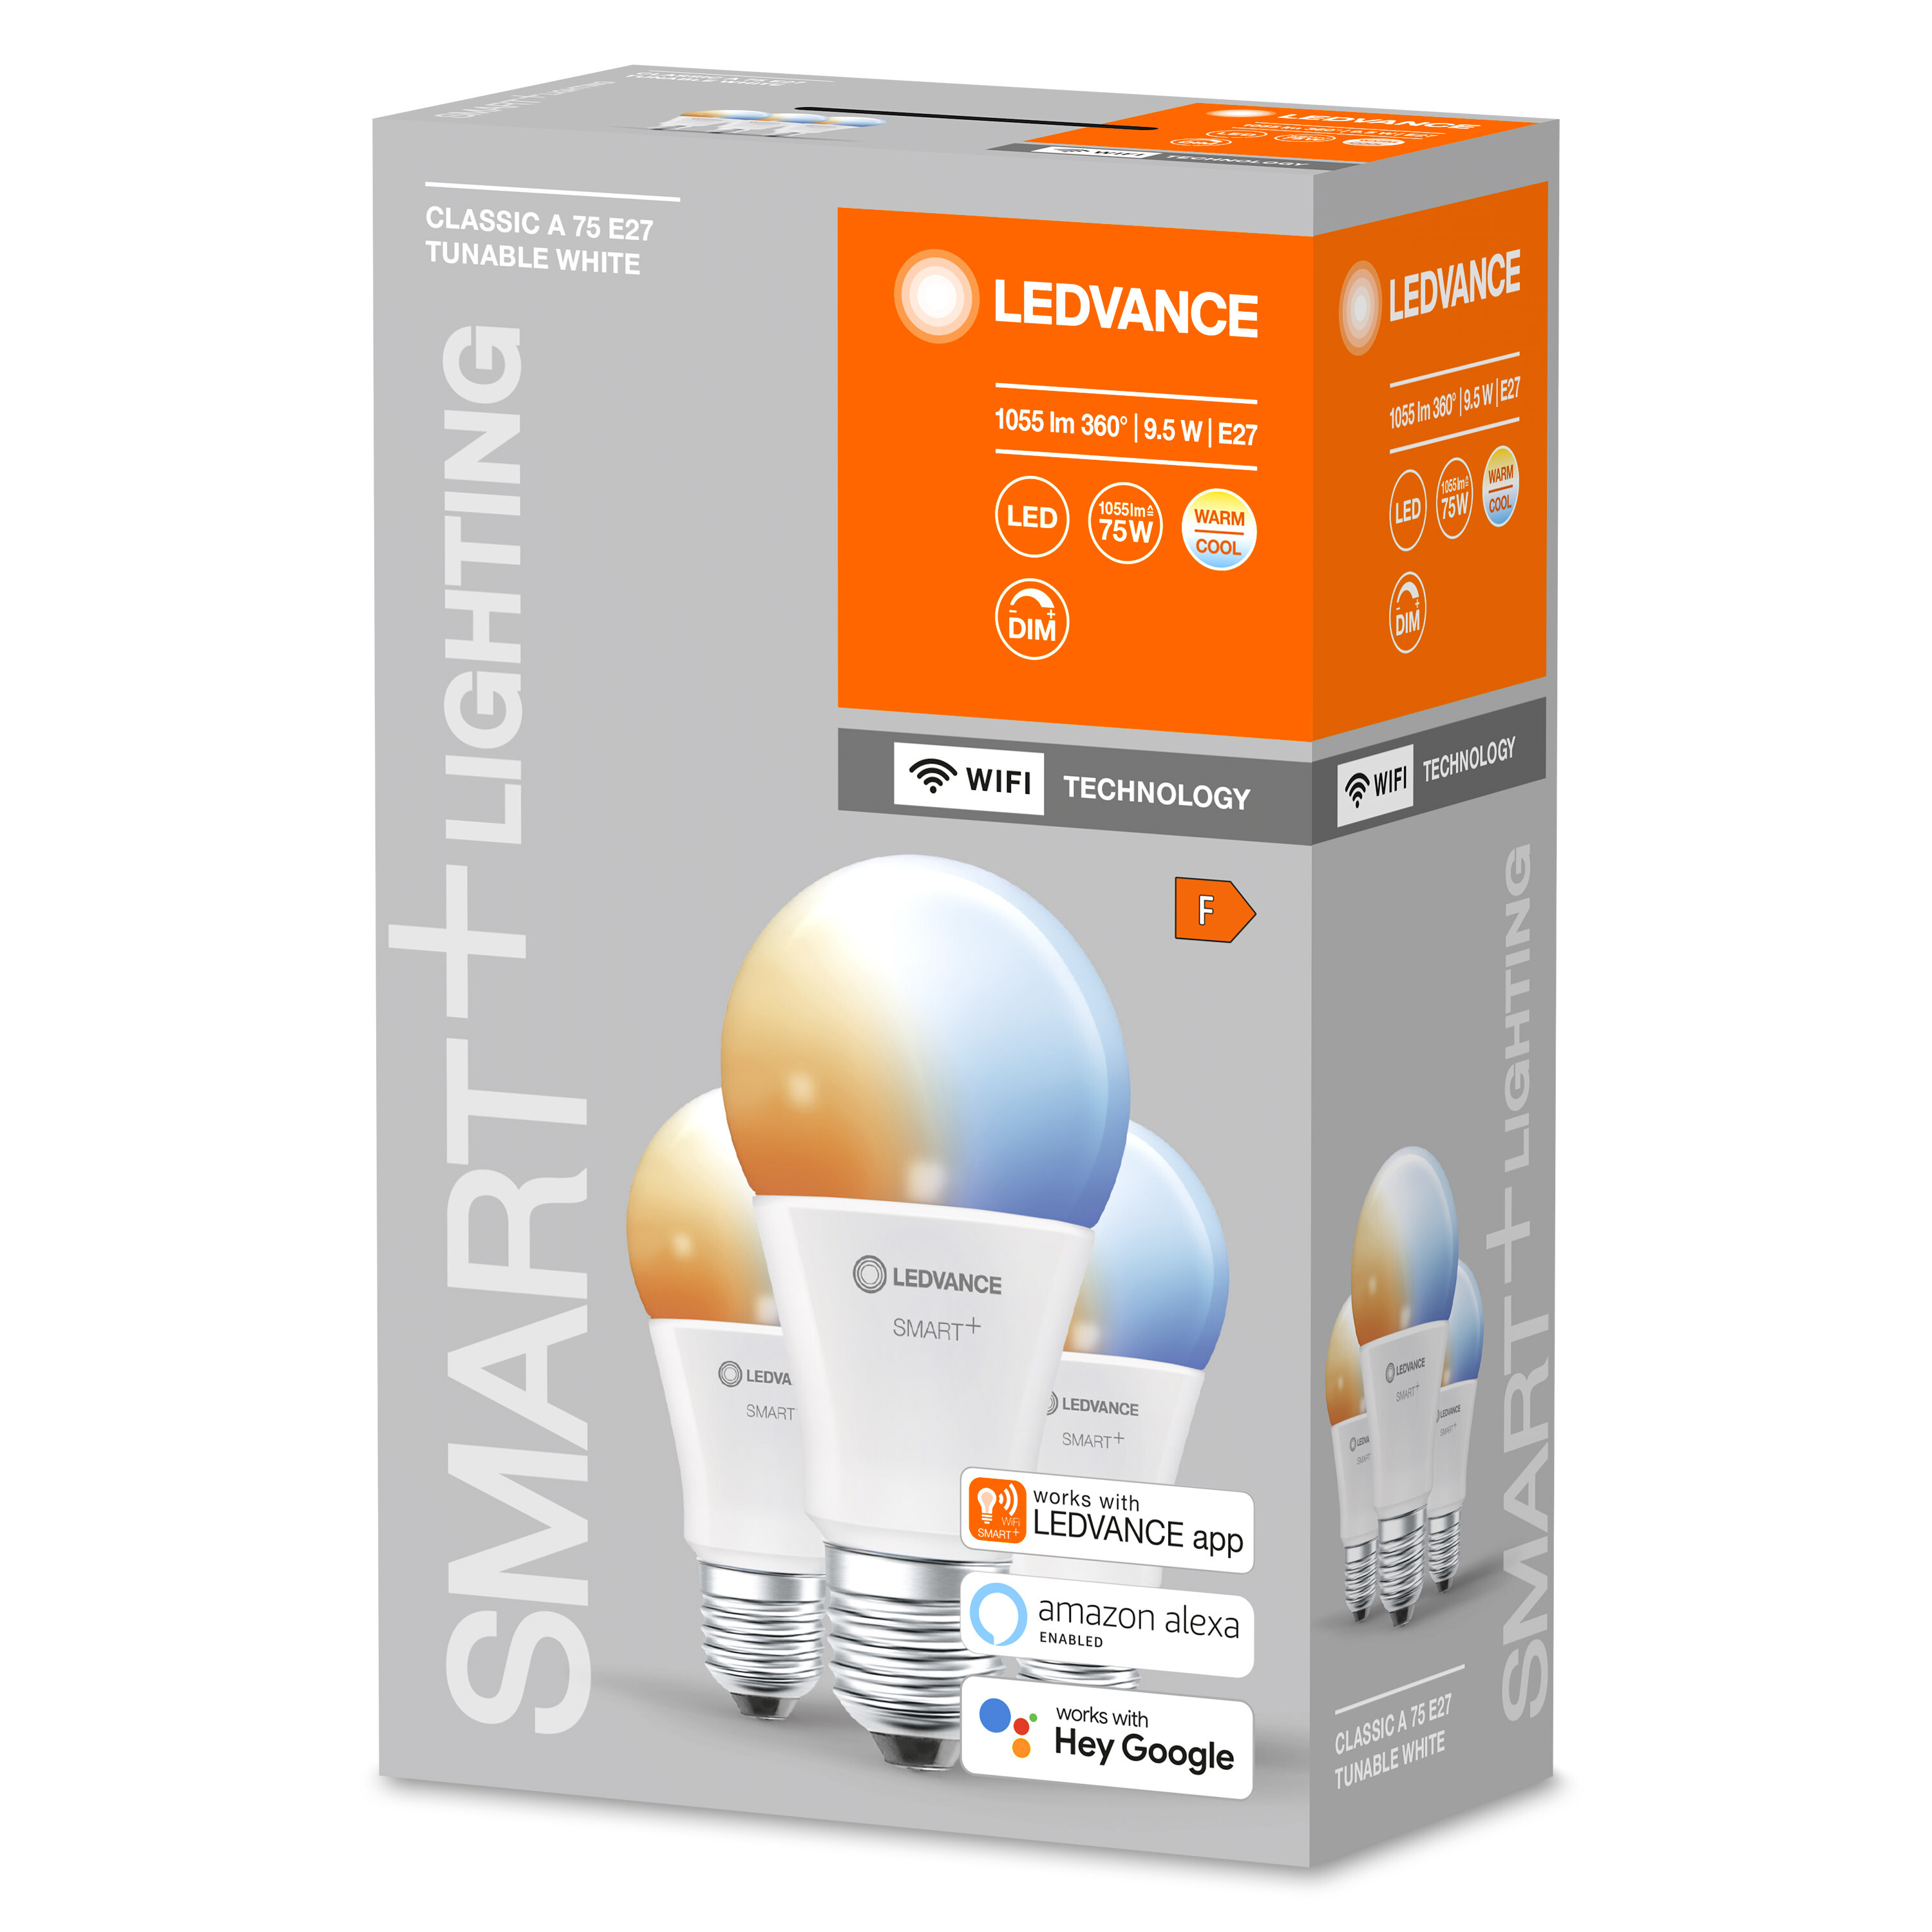 LEDVANCE SMART+ änderbar WiFi Tunable Classic Lichtfarbe LED Lampe White